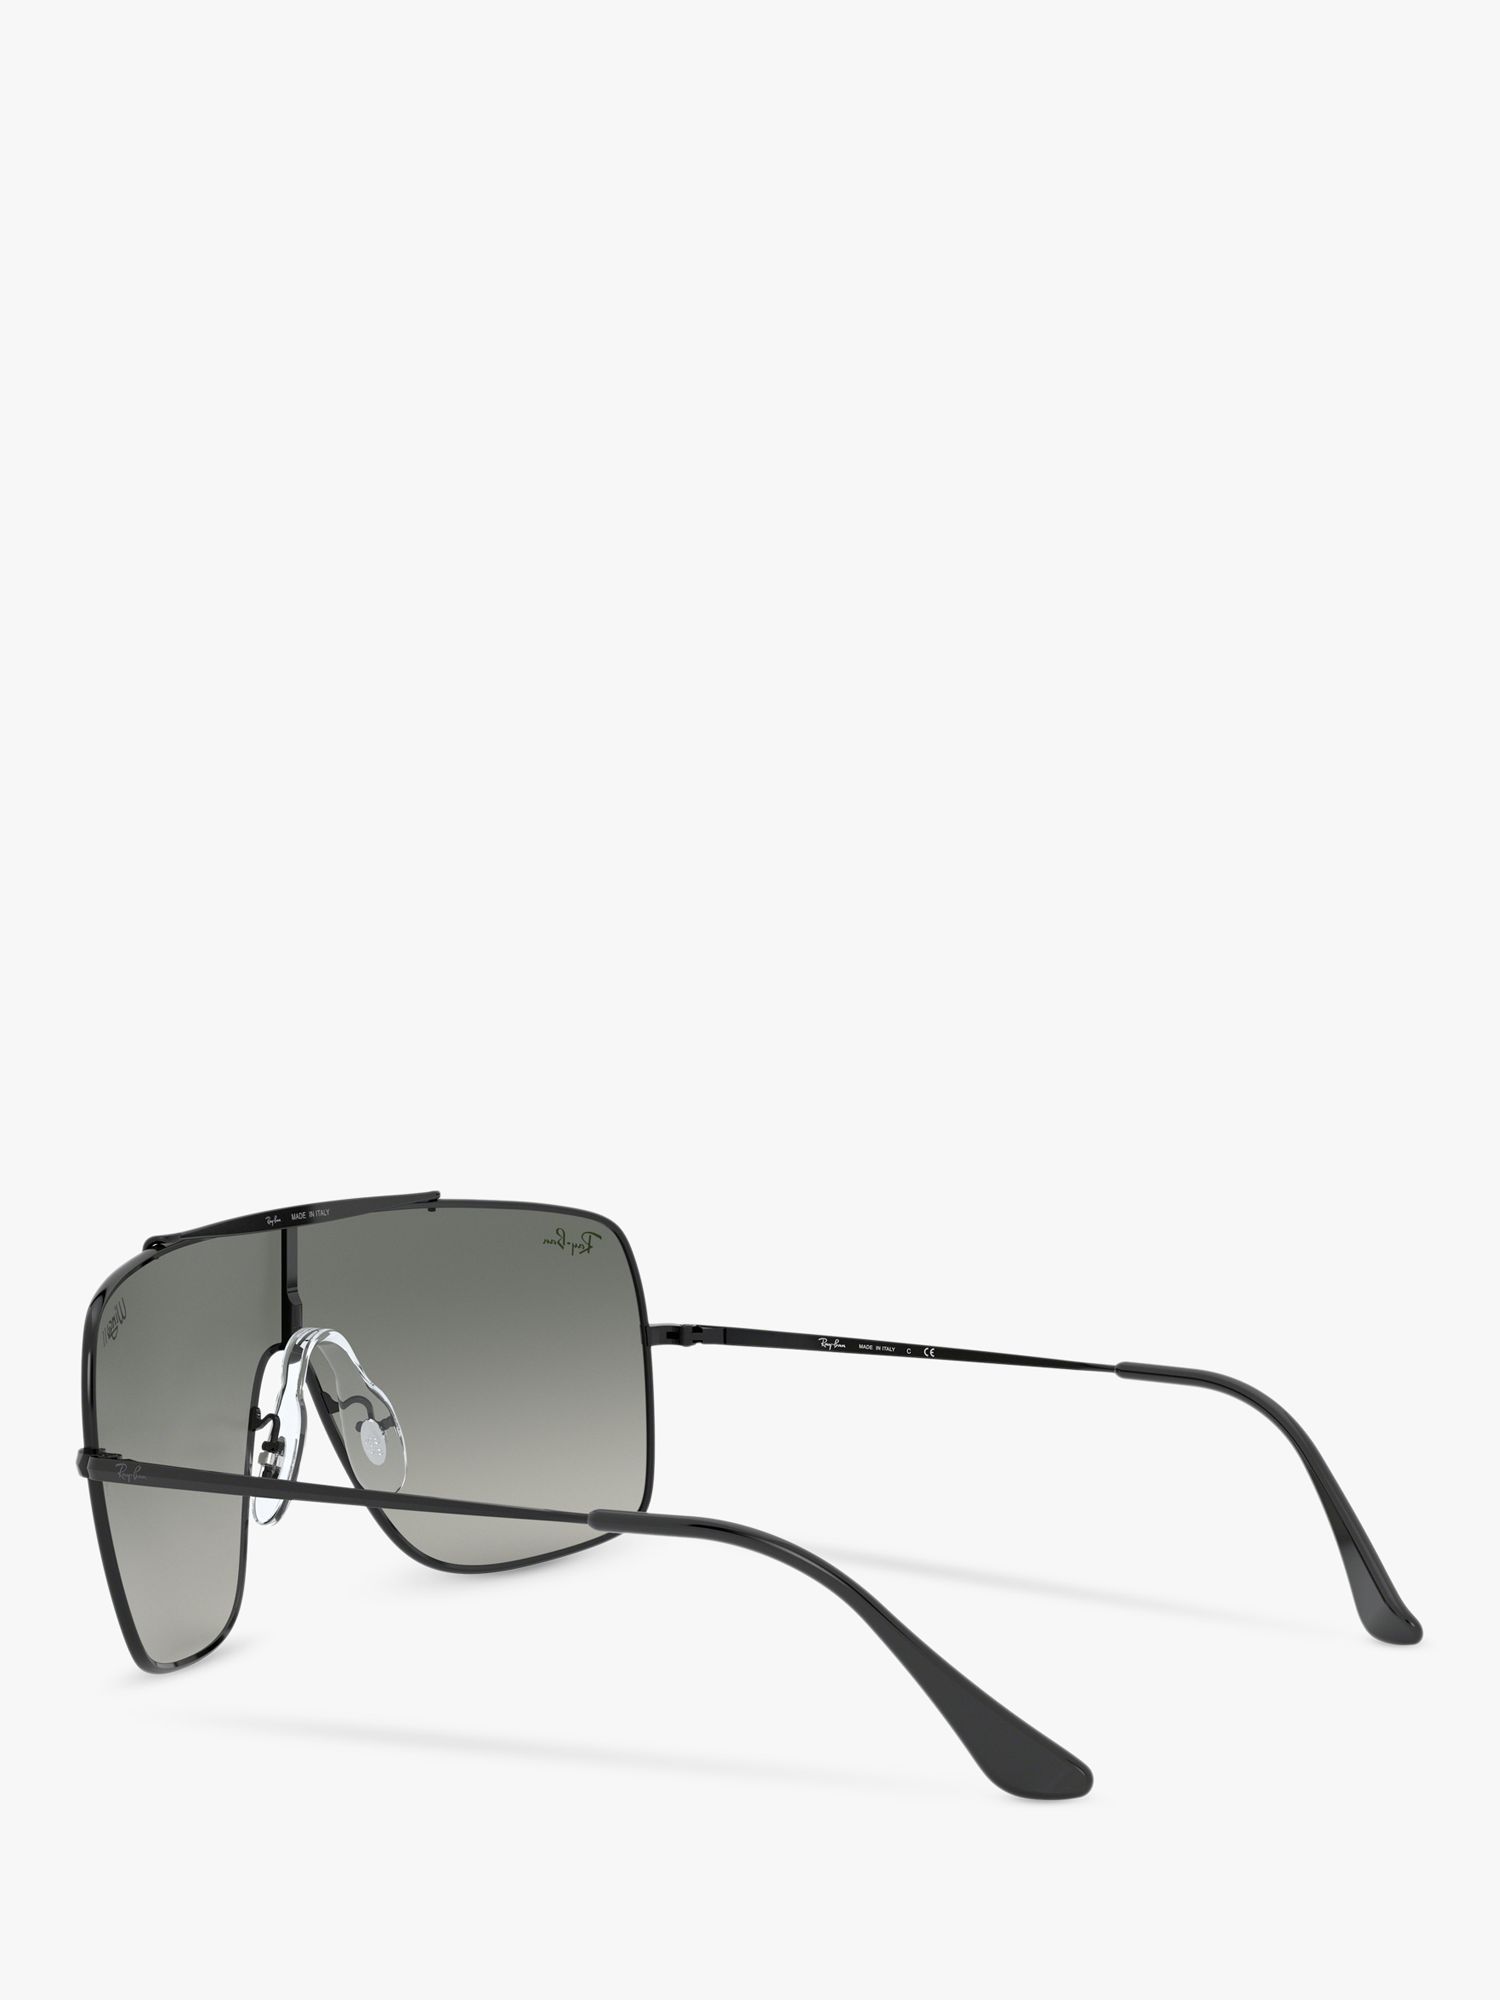 Ray-Ban RB3697 Men's Square Sunglasses, Black/Grey Gradient